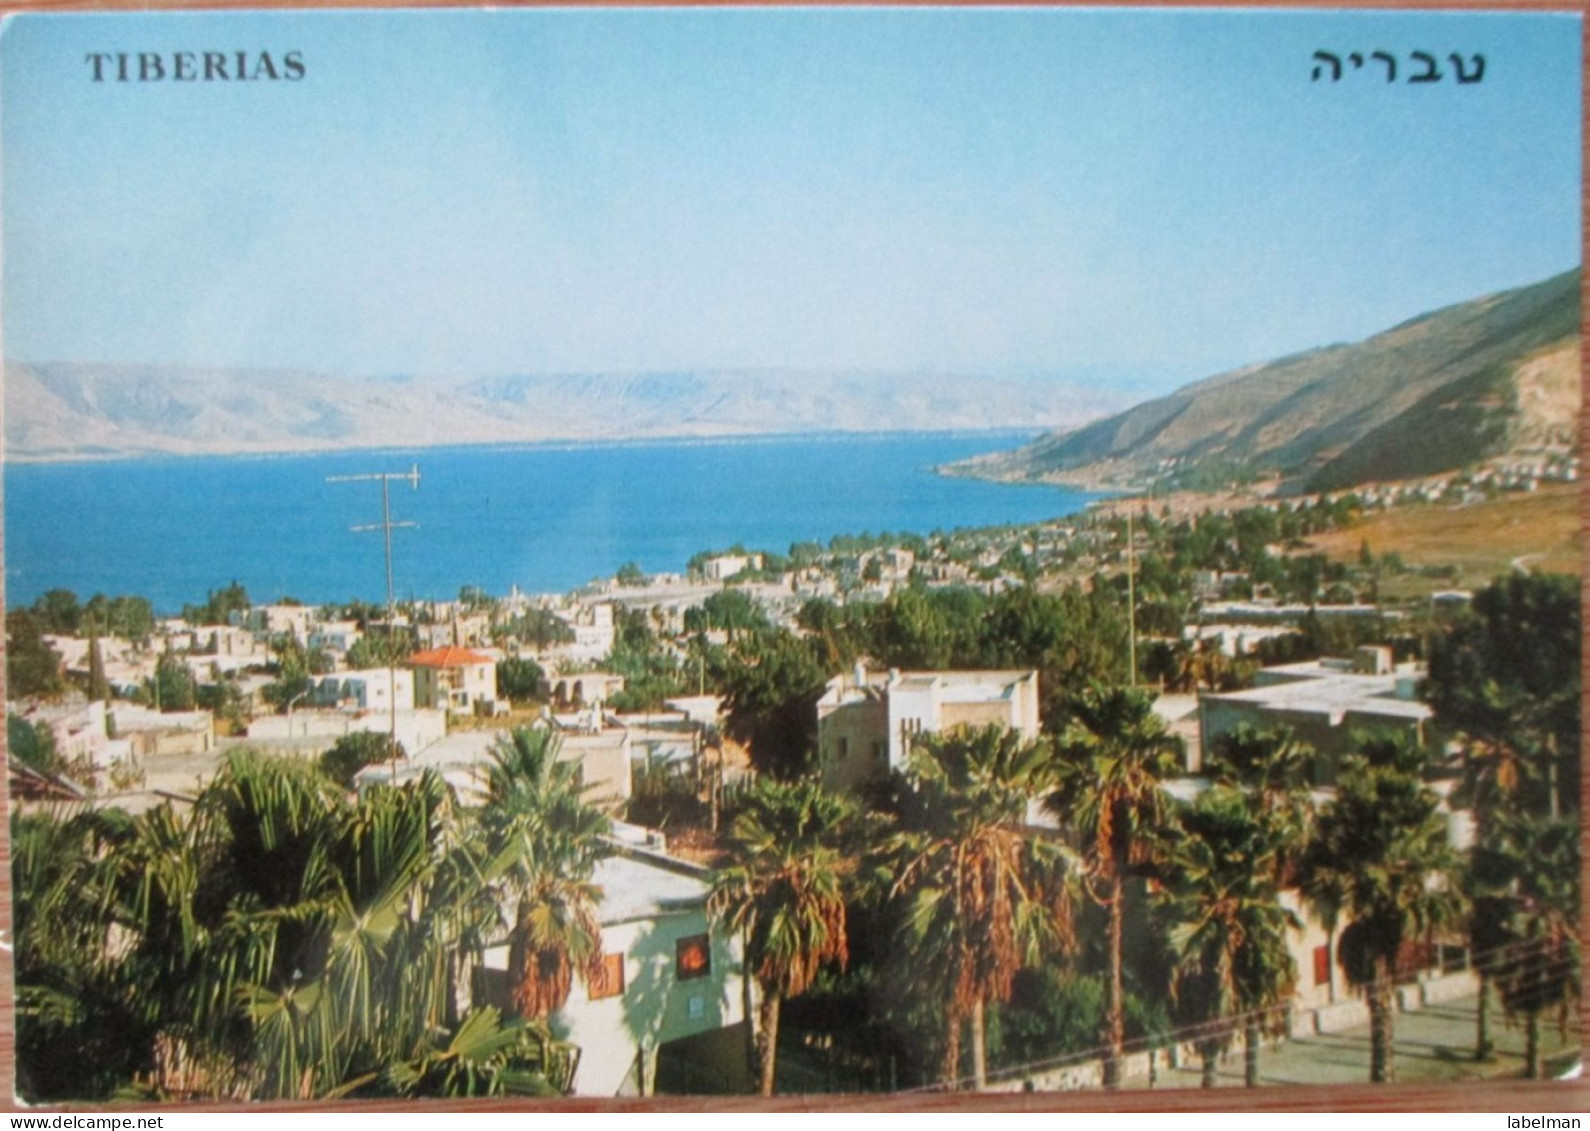 ISRAEL TIBERIAS KINNERET LAKE GALILEE SEA GOLAN MOUNTAIN CARTE POSTALE CARTOLINA ANSICHTSKARTE POSTCARD POSTKARTE CARD - Israel